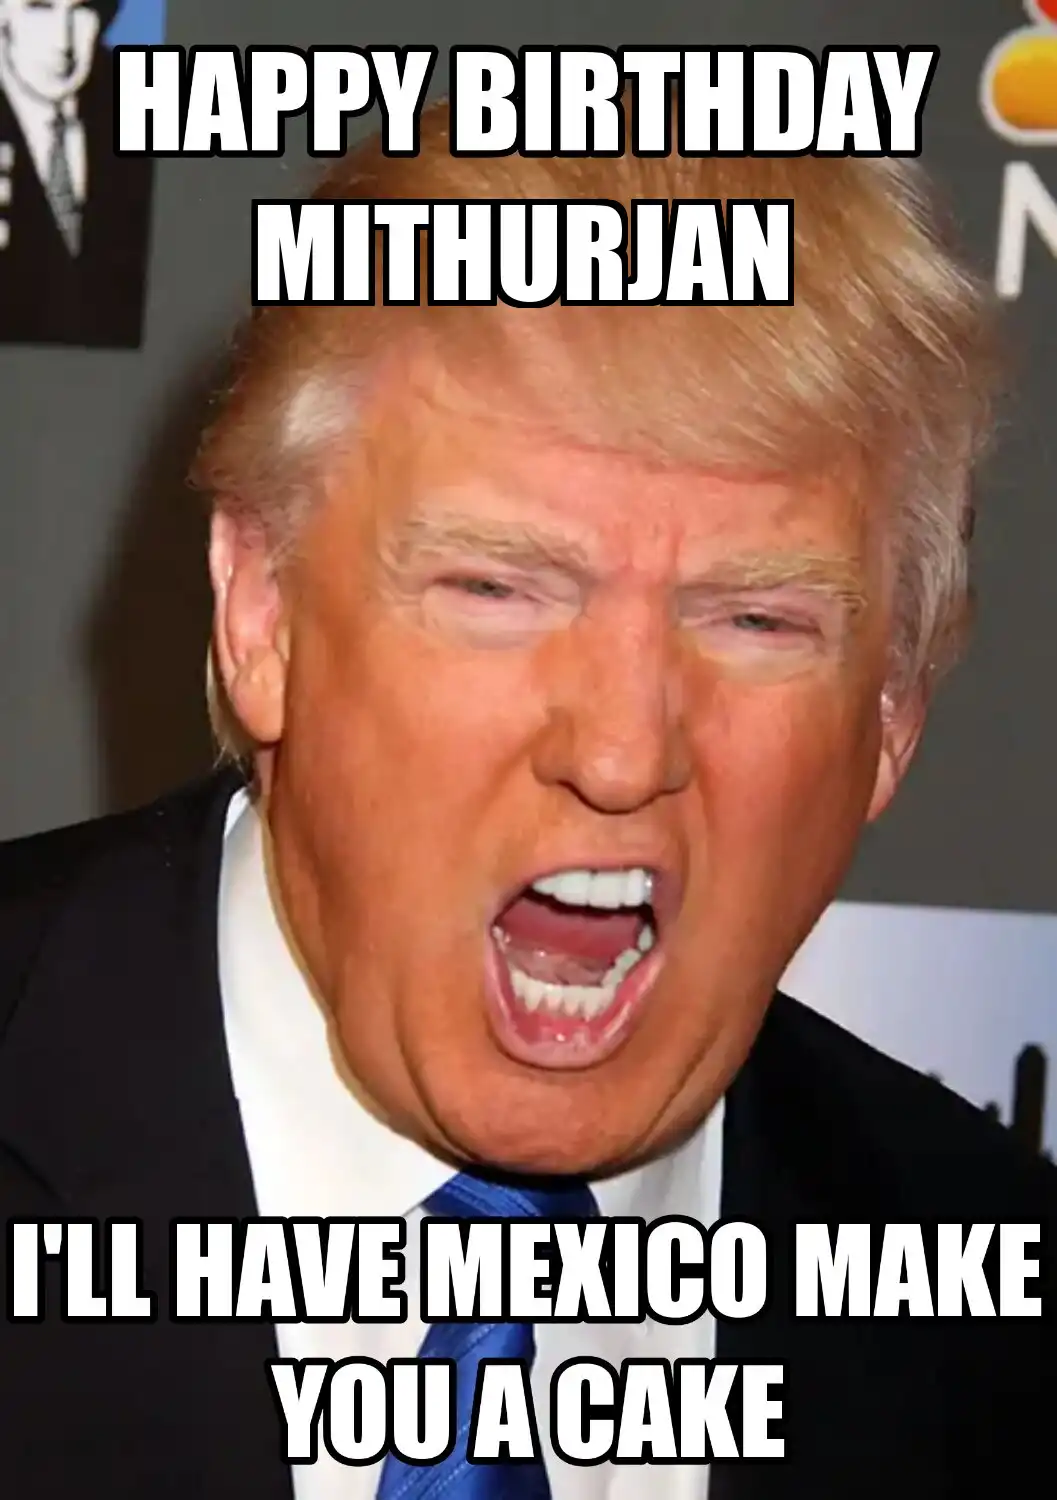 Happy Birthday Mithurjan Mexico Make You A Cake Meme